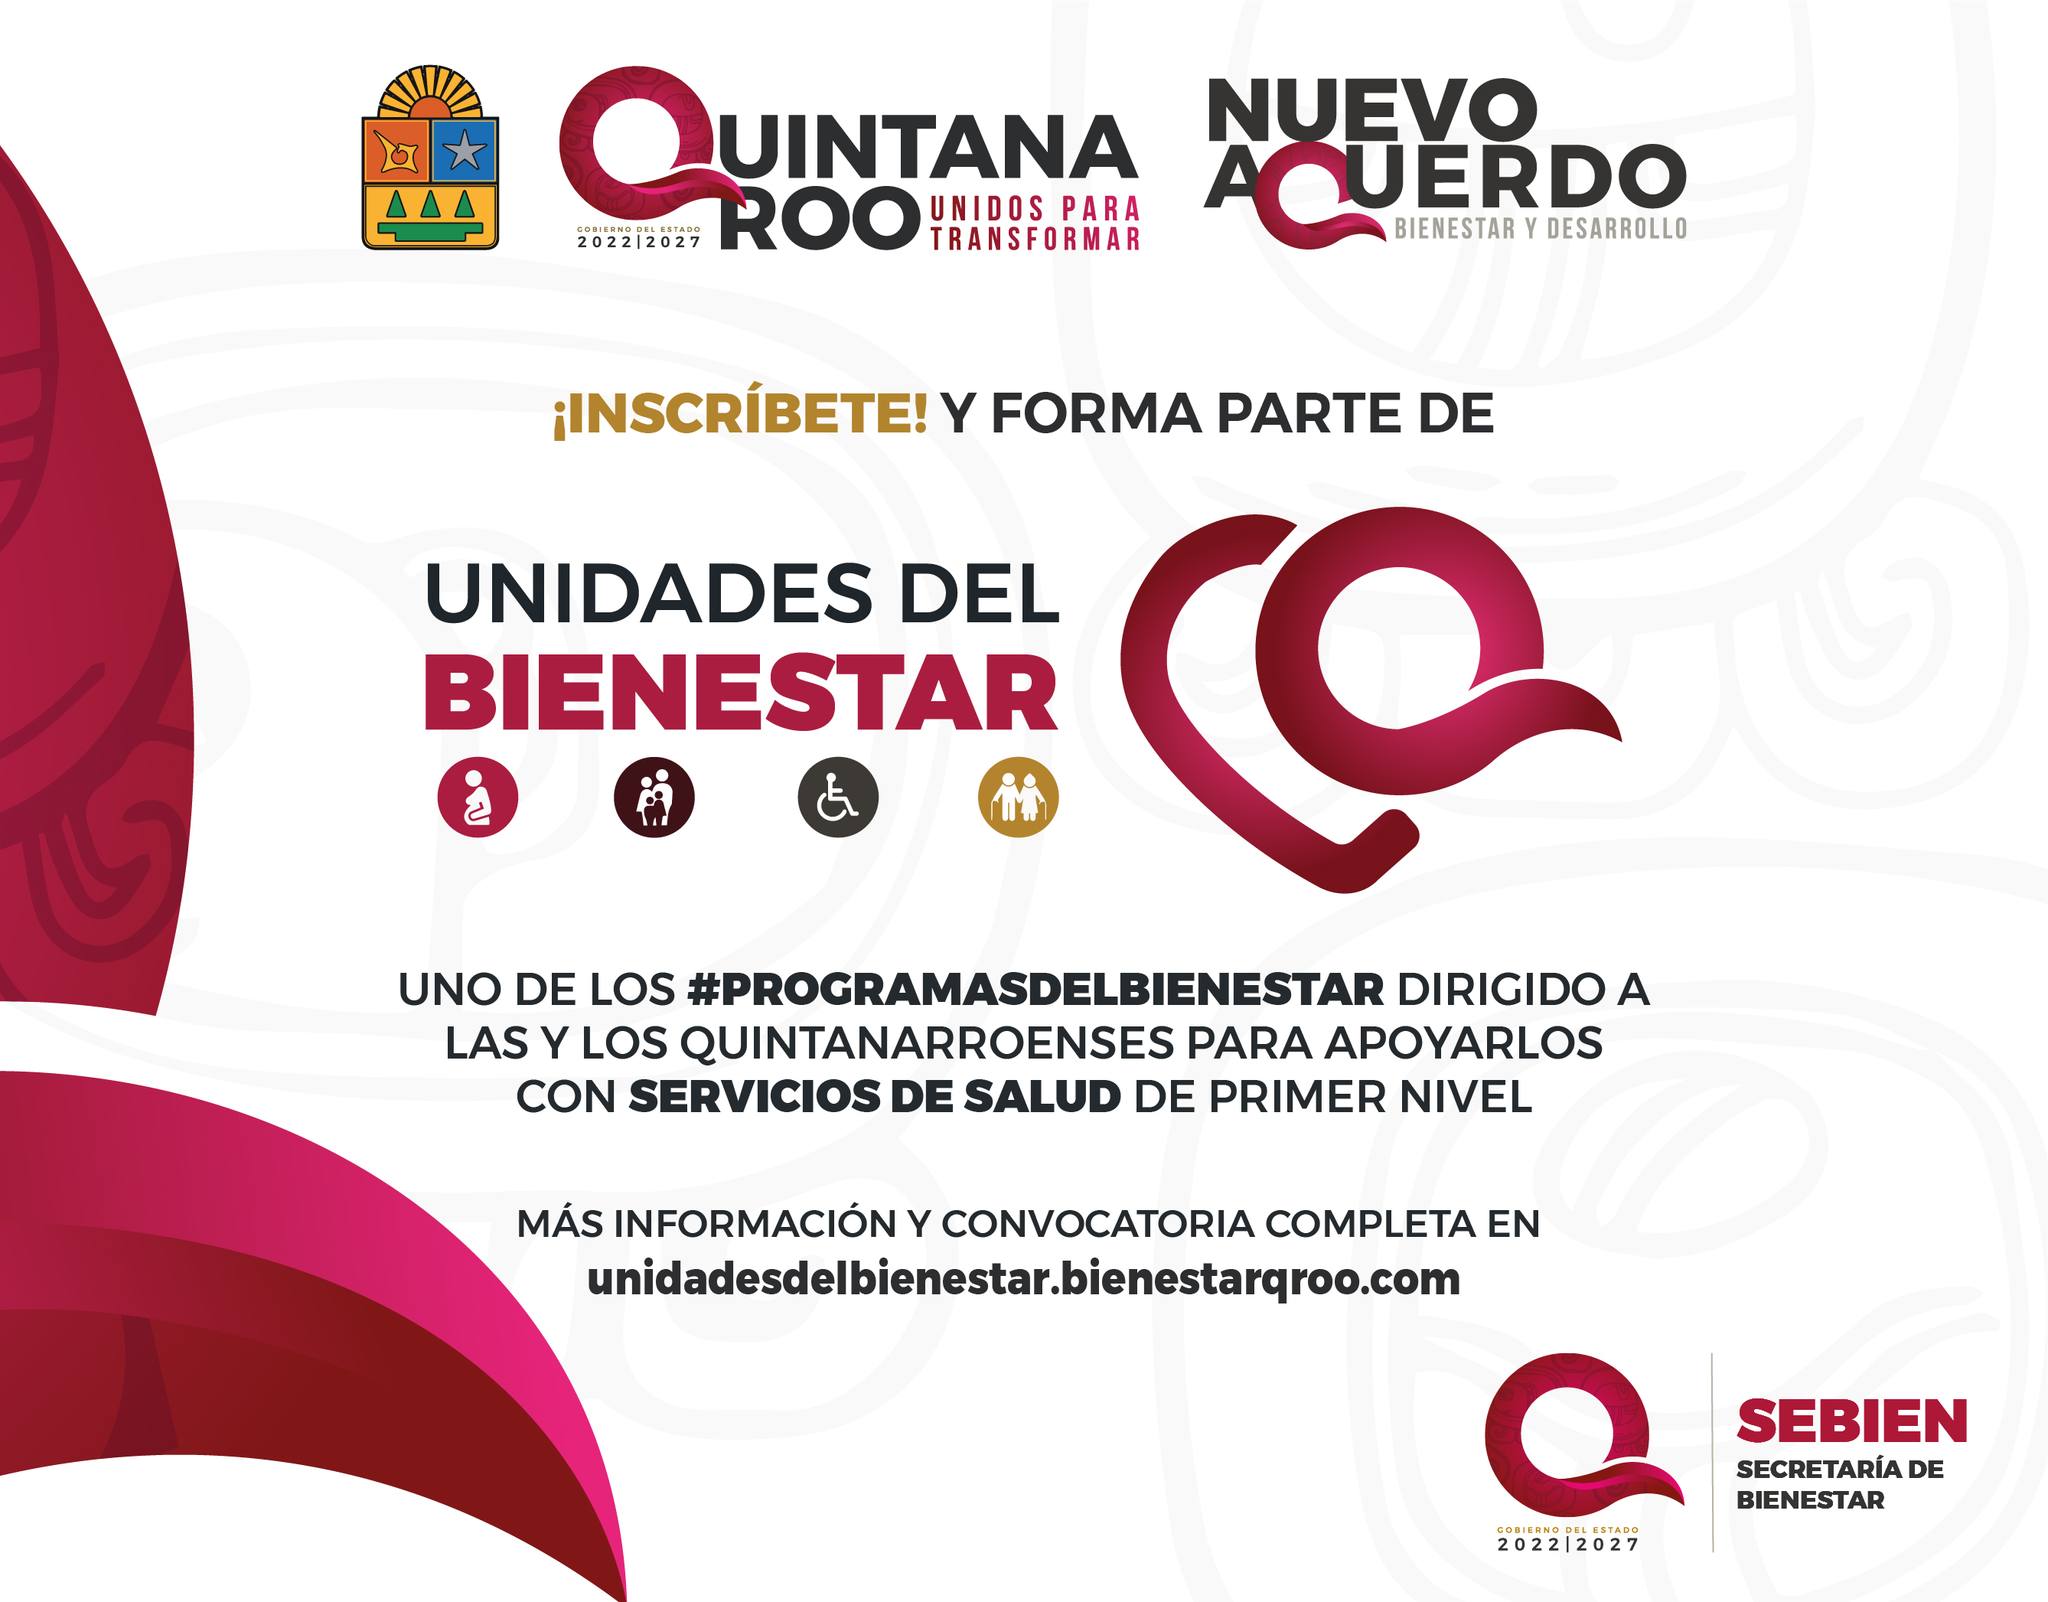 Unidades del bienestar Quintana Roo